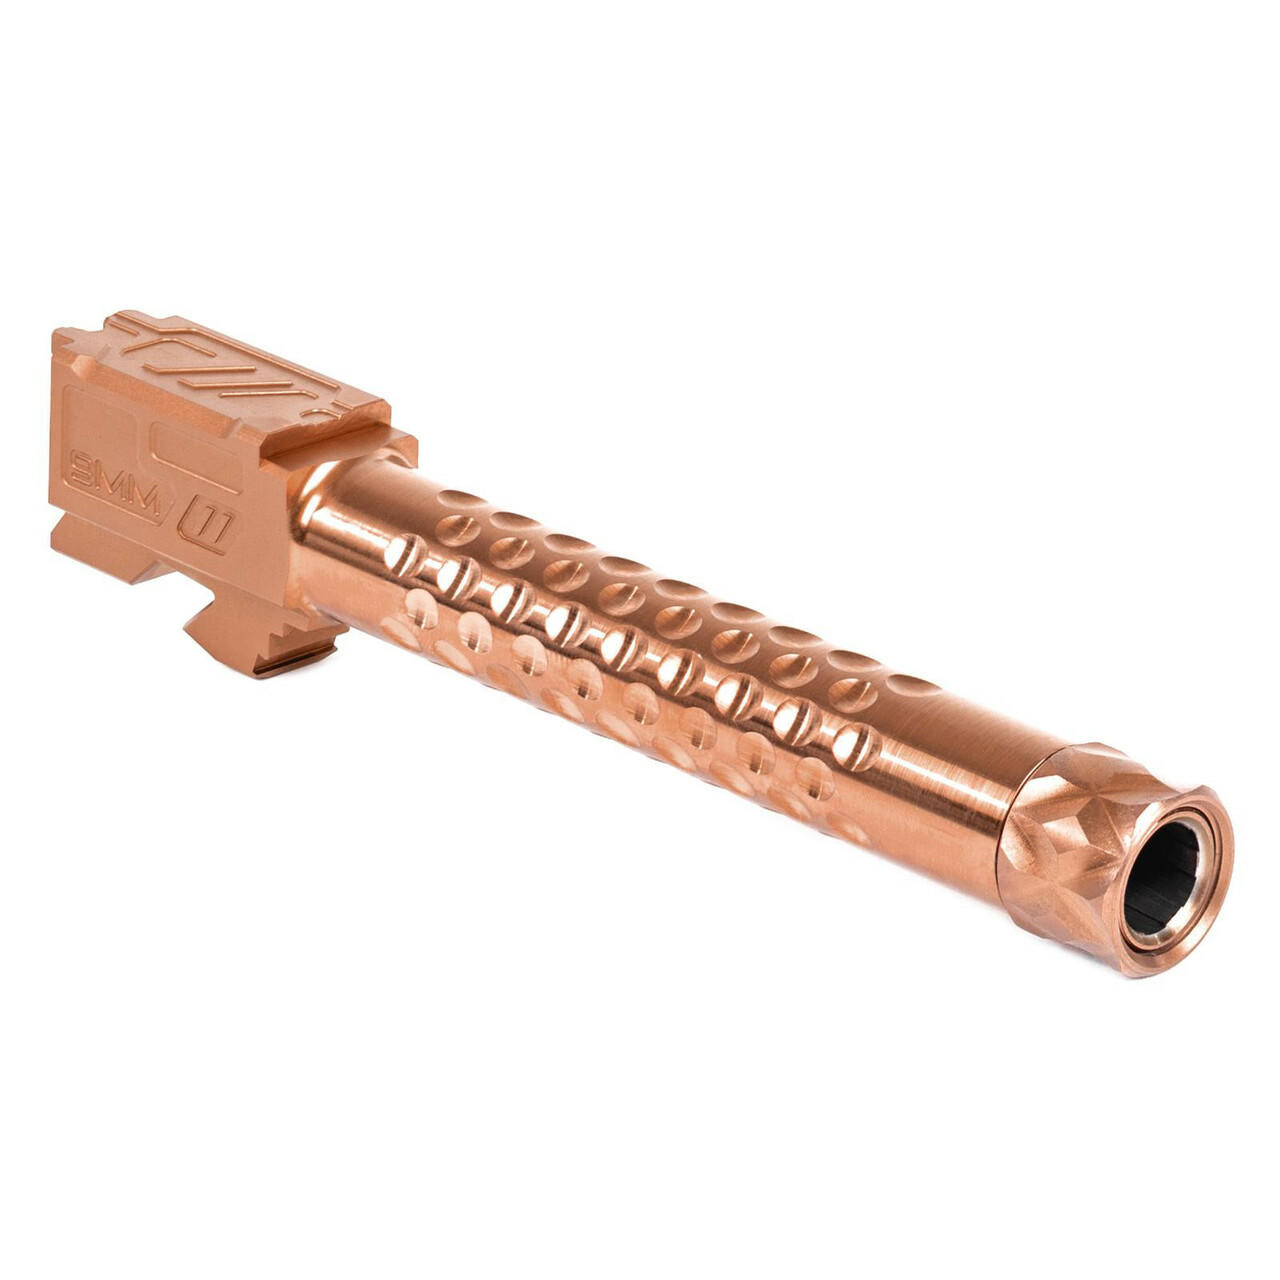 ZEV ZEV Optimized Match Barrel For Glock 17, Gen1-3, 1/2X28 Threading, Bronze